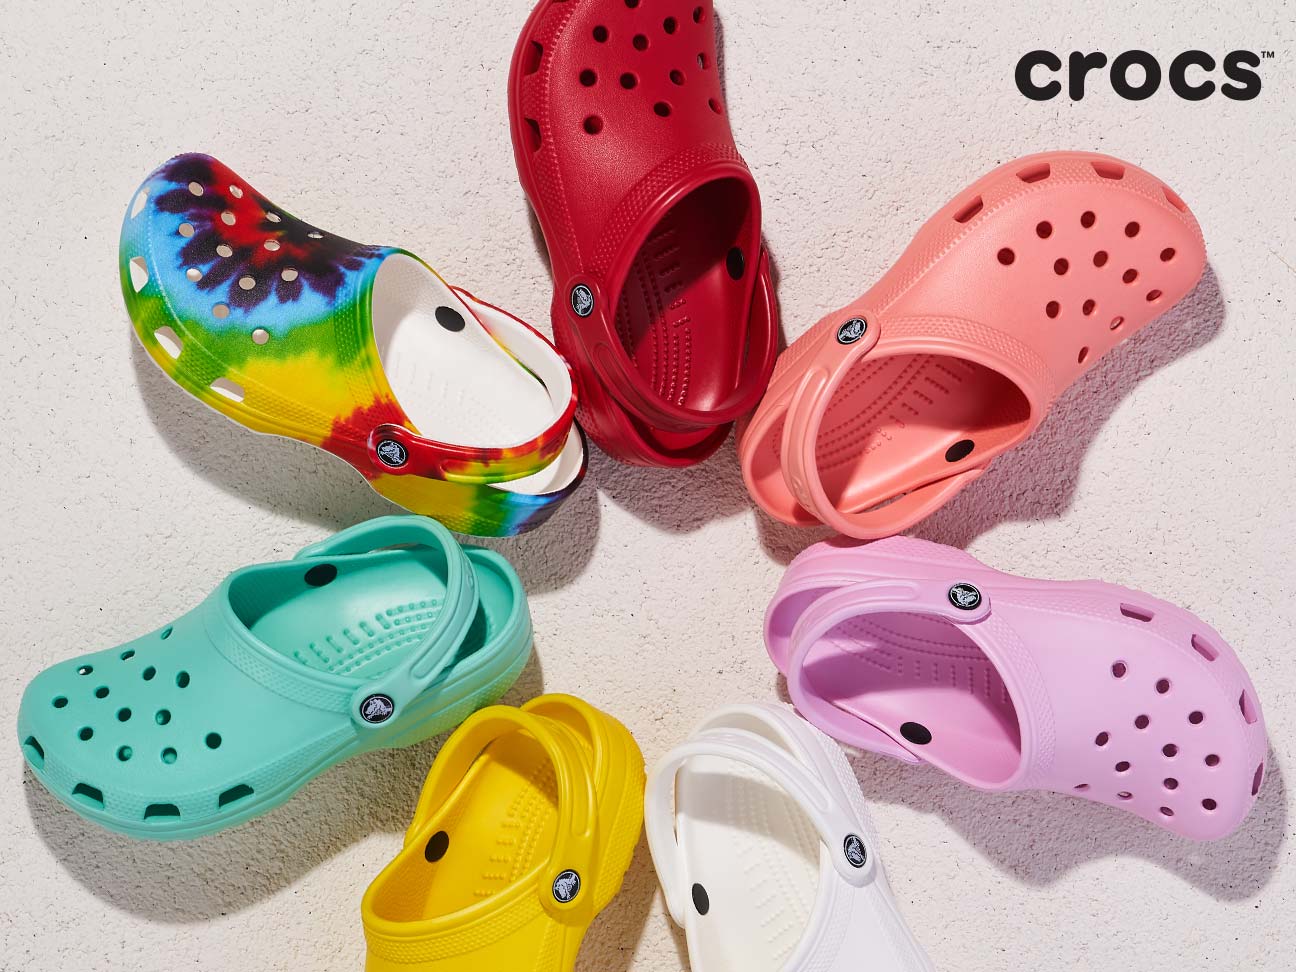 crocs for women near me